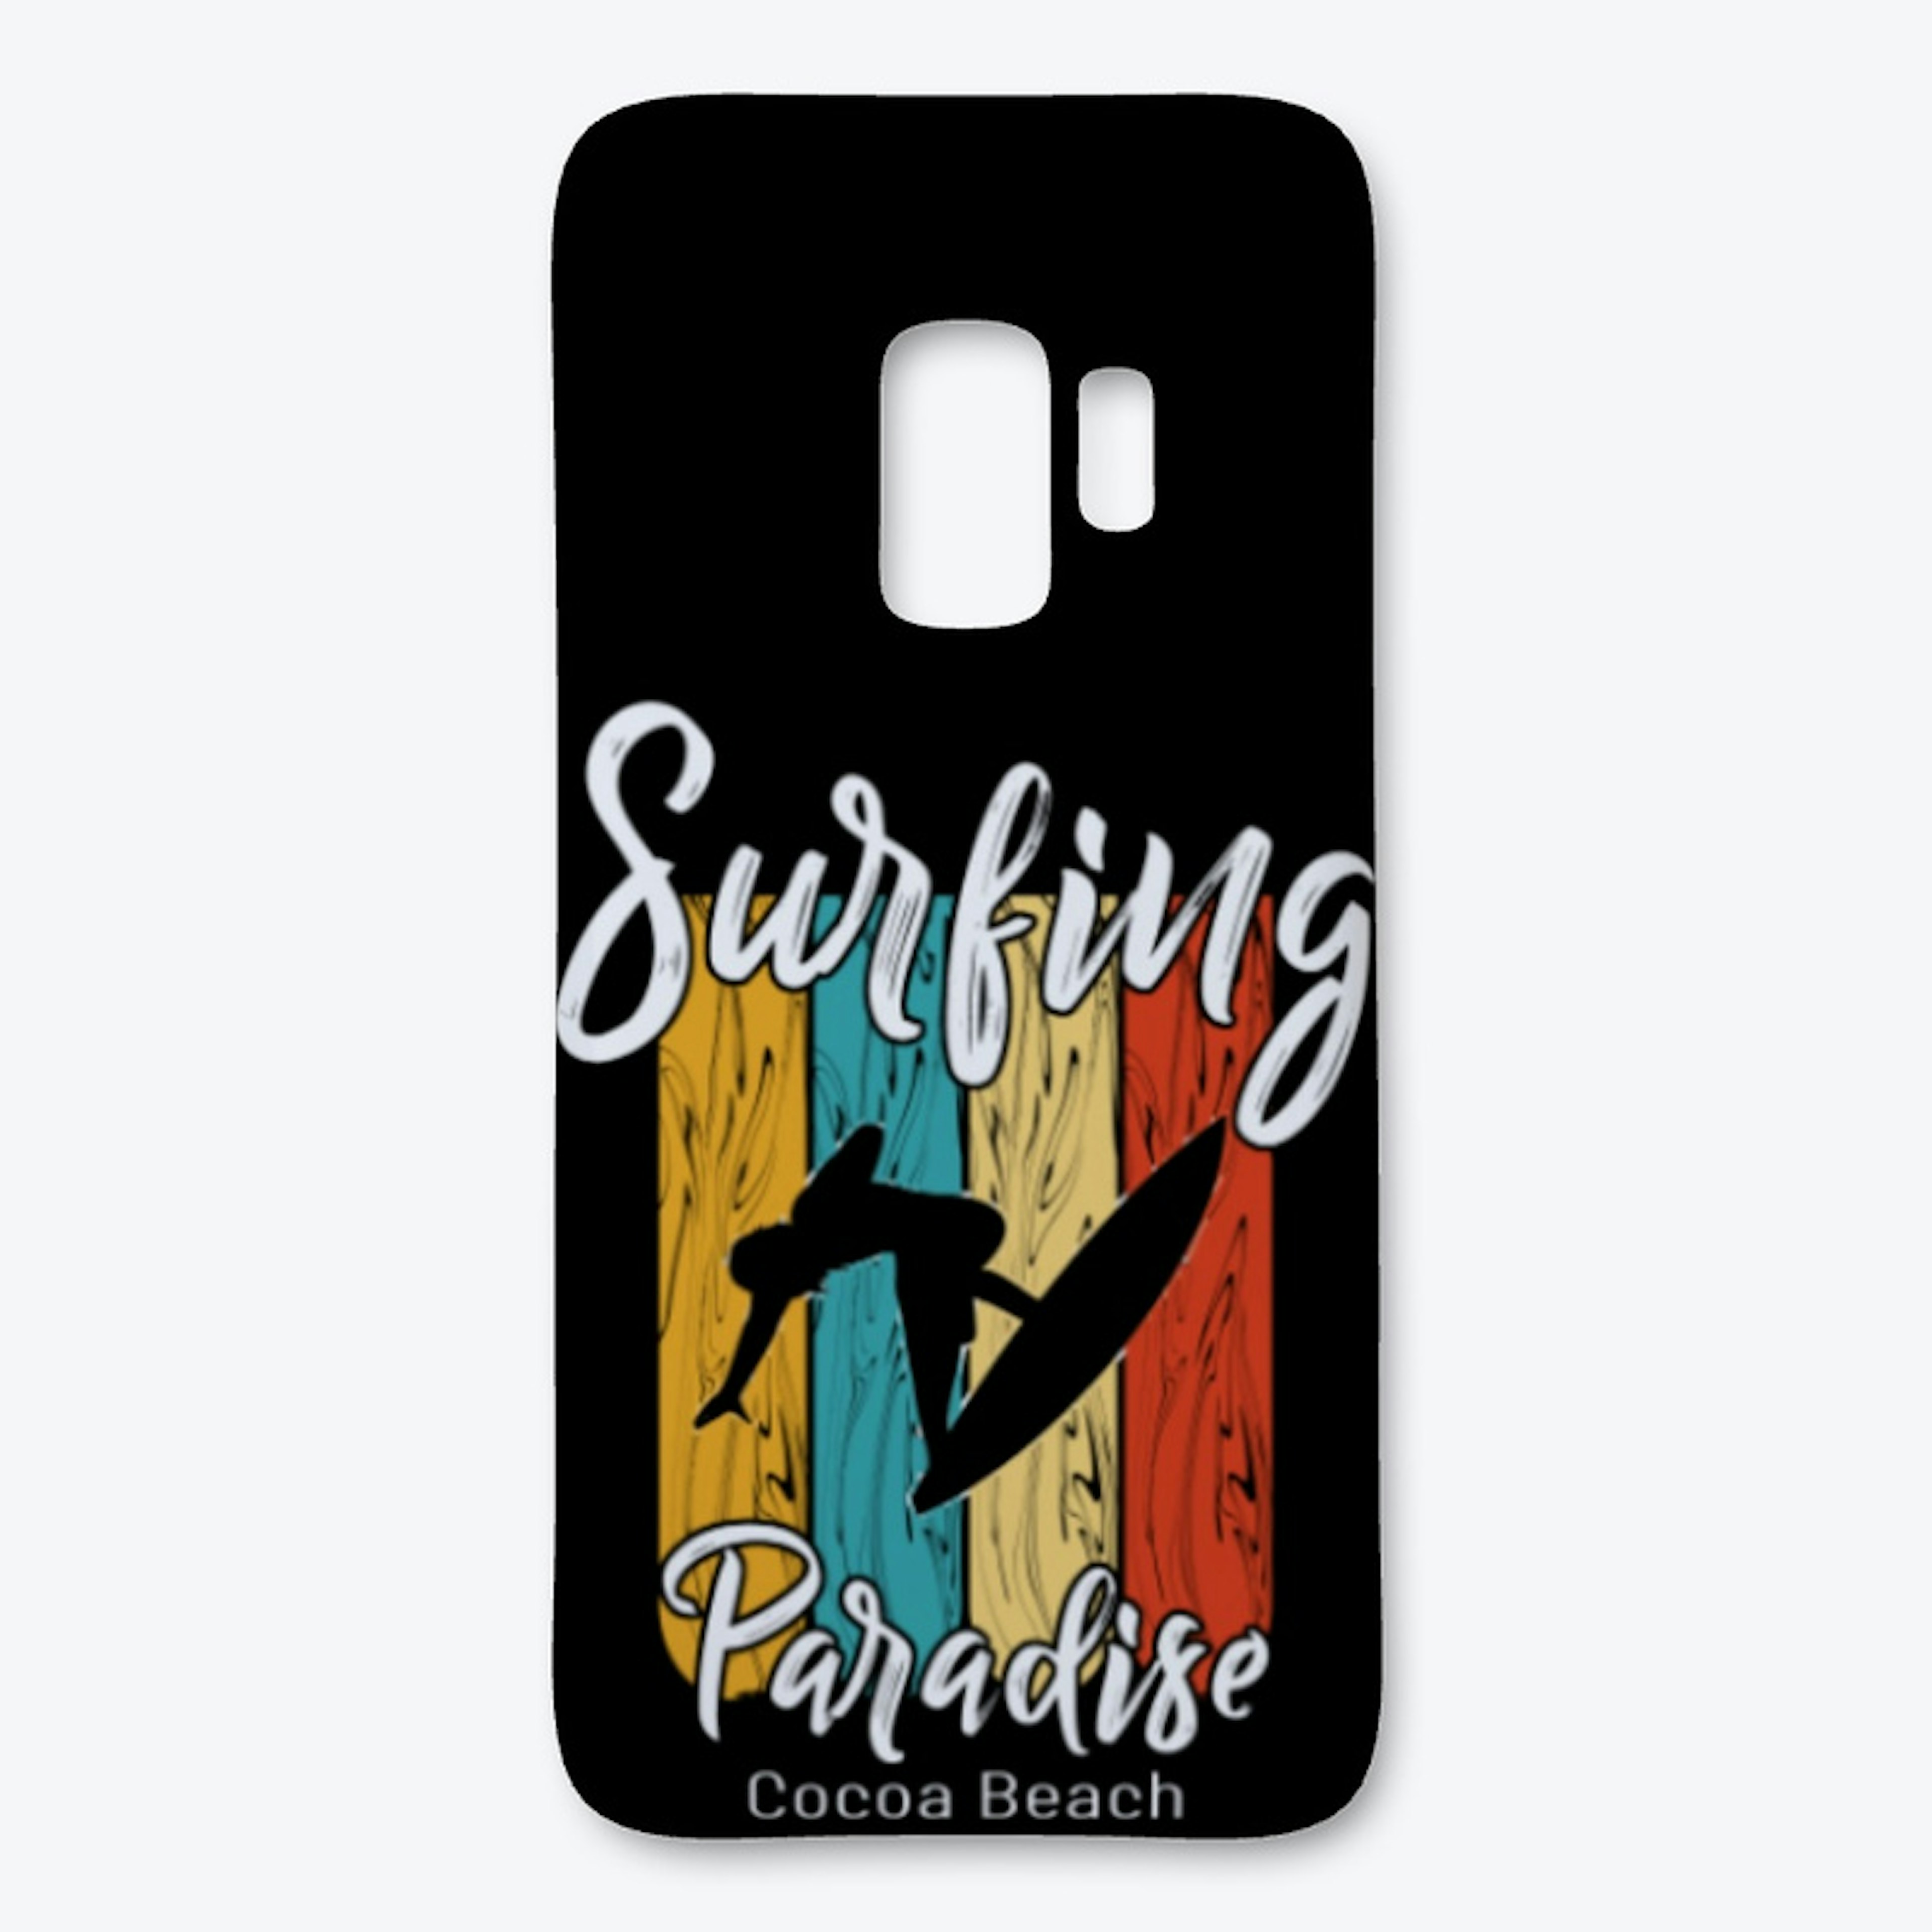 Surfing Paradise Cocoa Beach t shirt